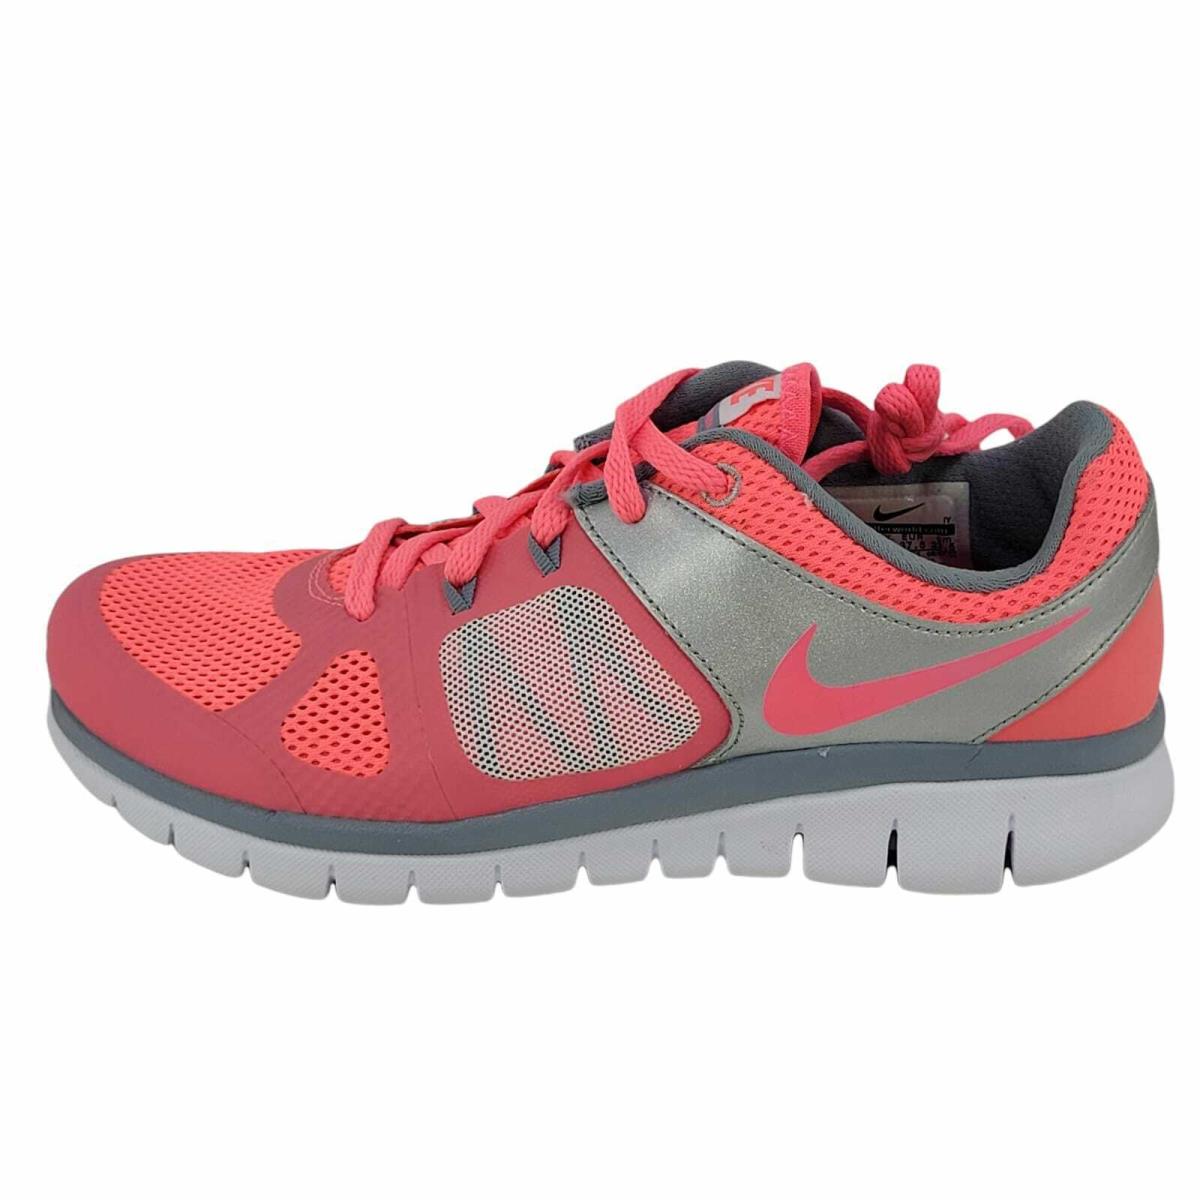 ding Graag gedaan Humoristisch Nike Flex 2014 RN GS 642755 601 Pink Sneakers Shoes Size Girls 5 = 6.5 Women  | - Nike shoes Flex Running - Pink | SporTipTop